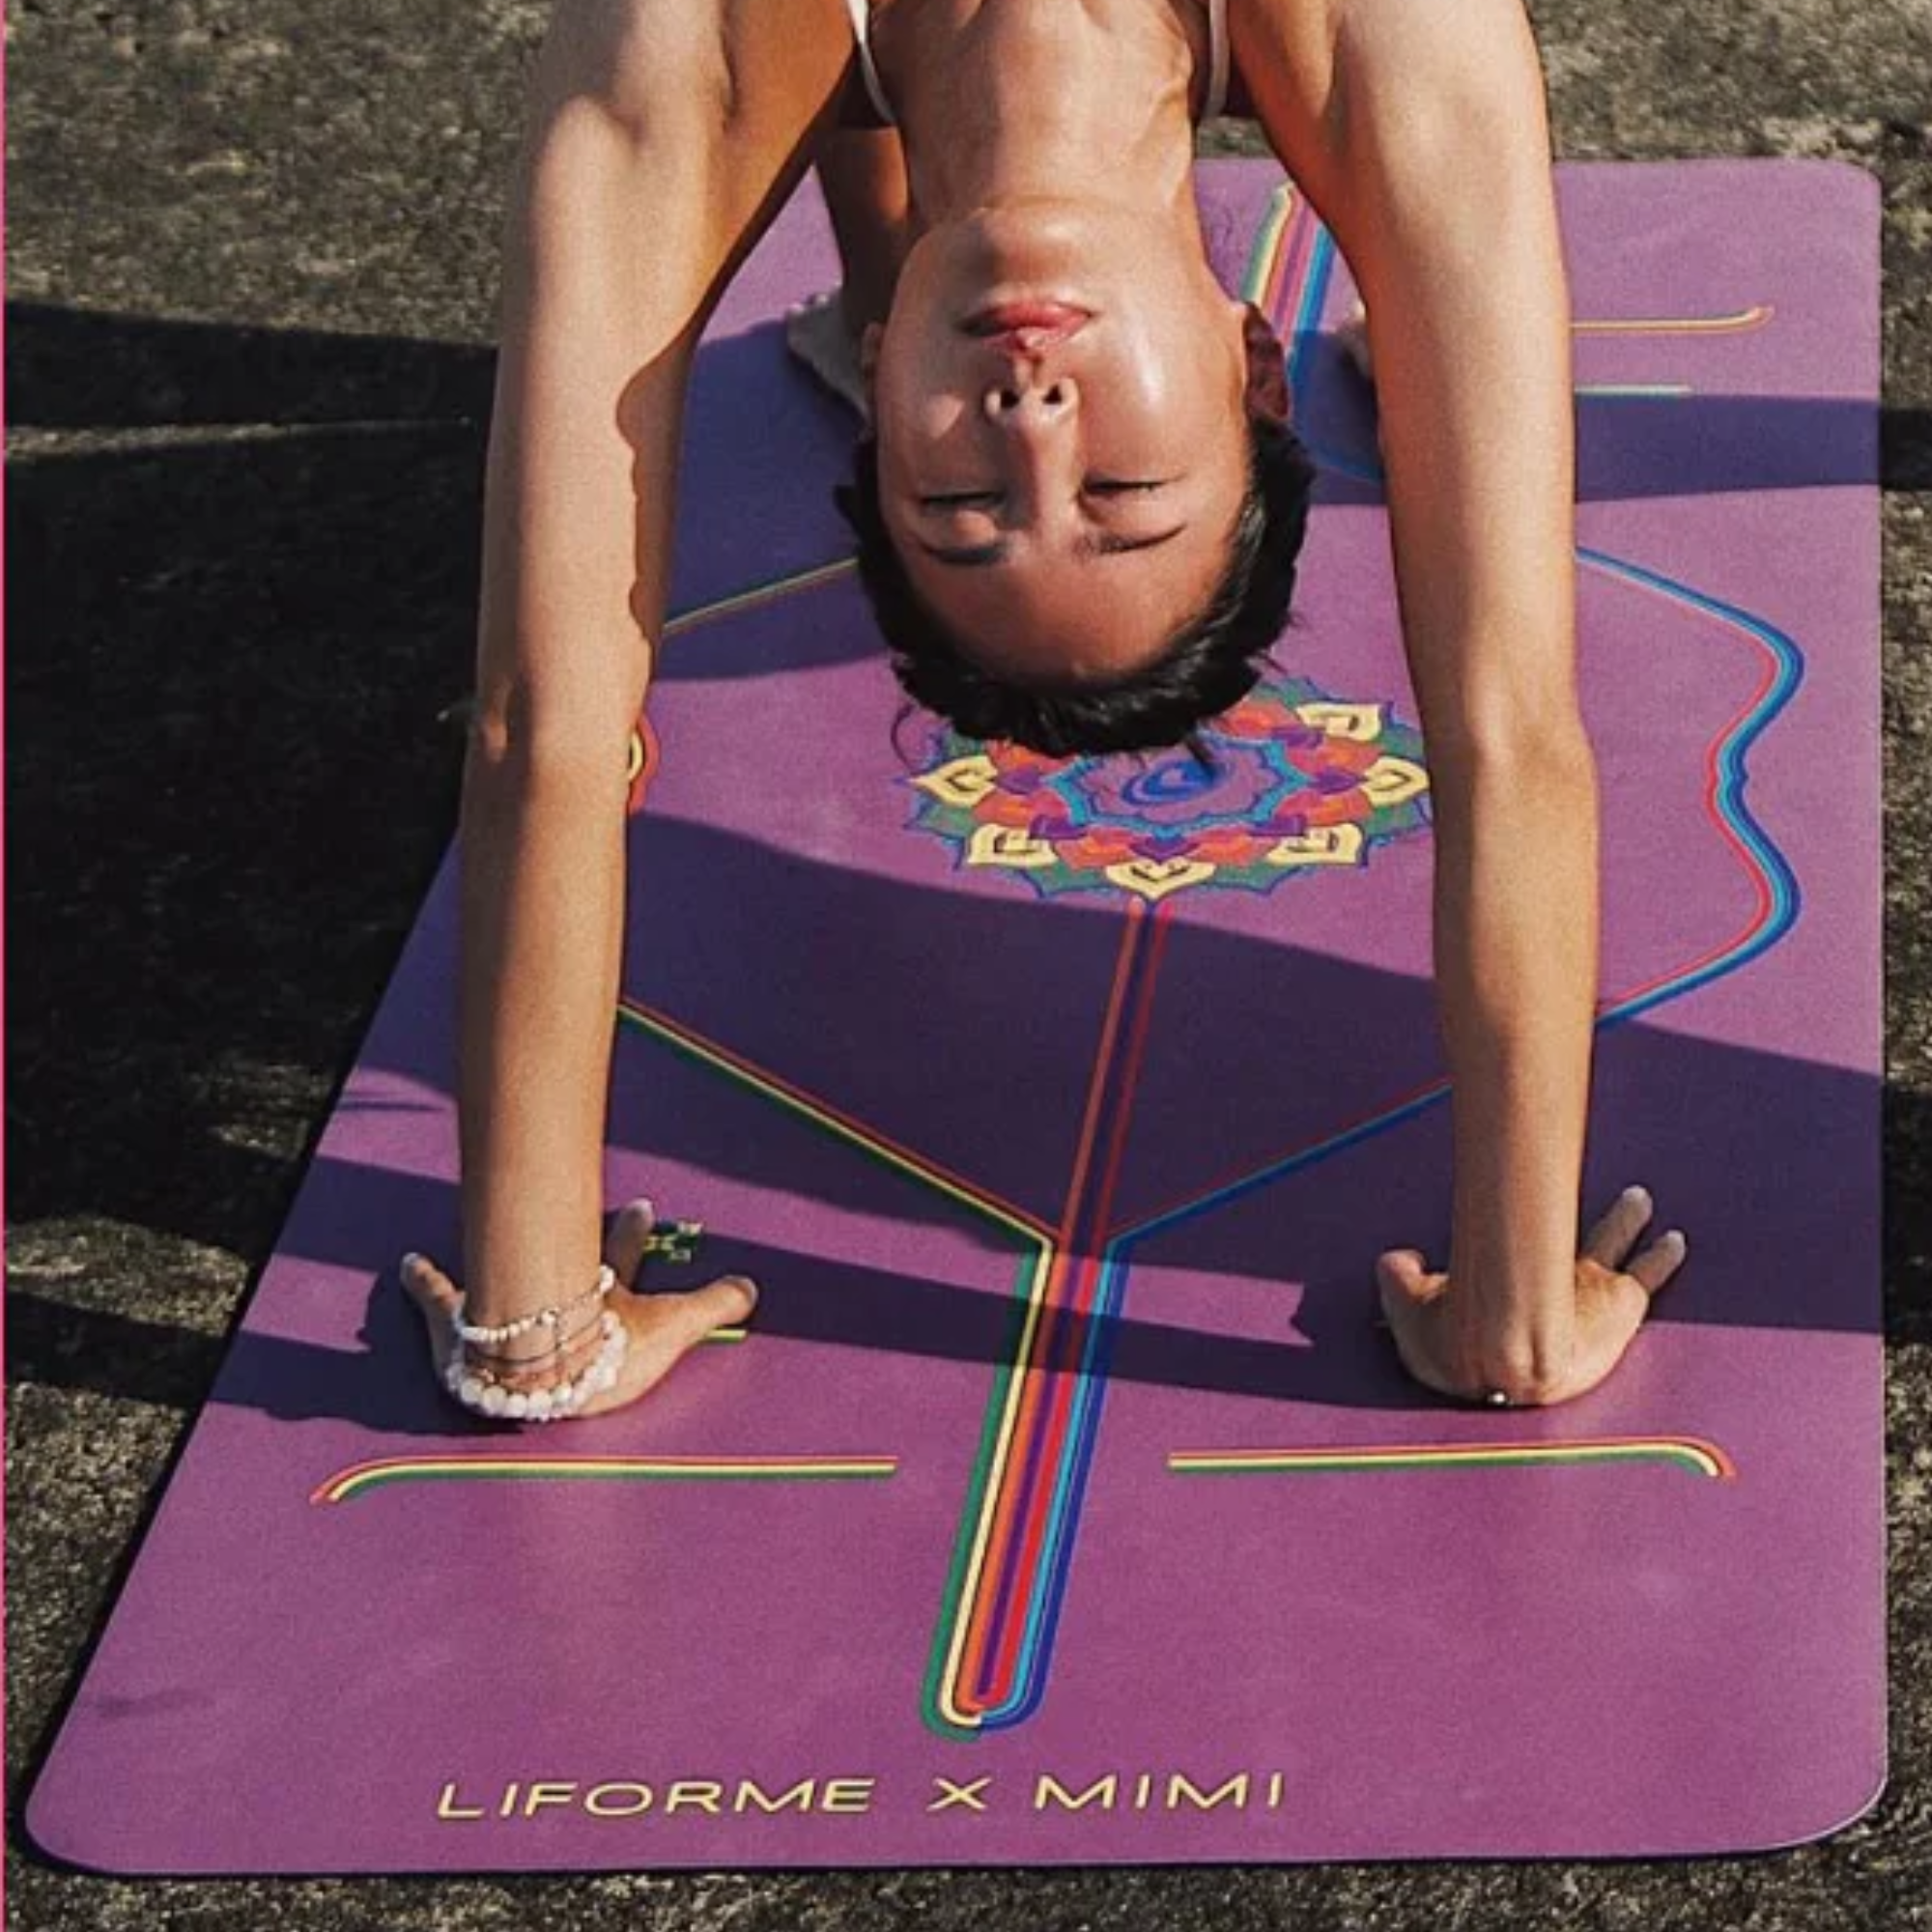 Liforme yoga mats